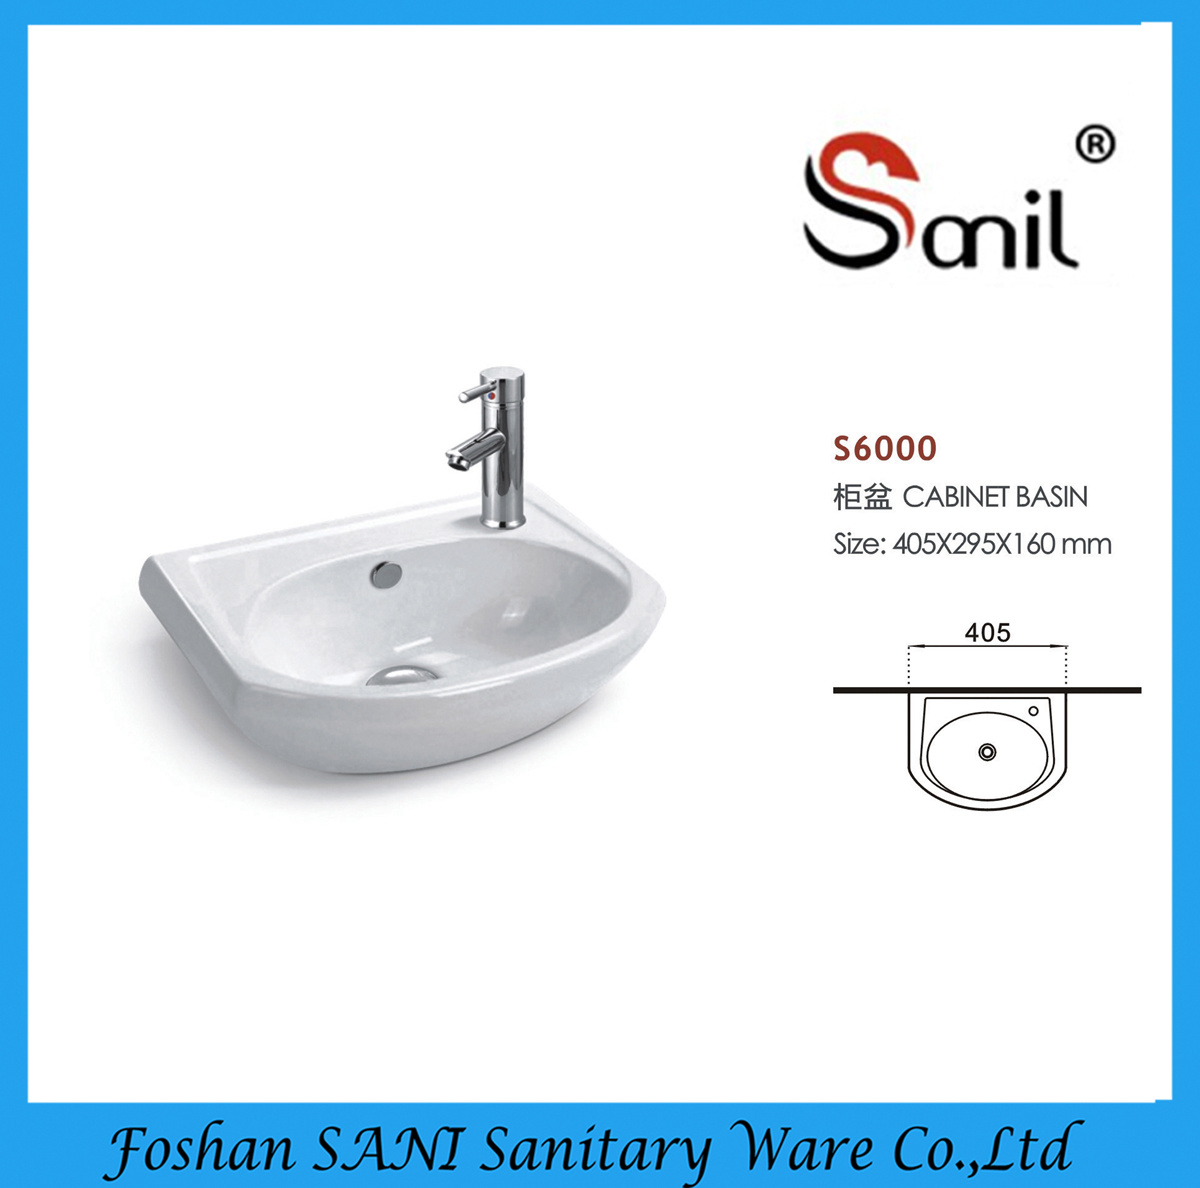 Grade a Quality Ceramic Sanitary Ware Small Vanity Sink (S6000)